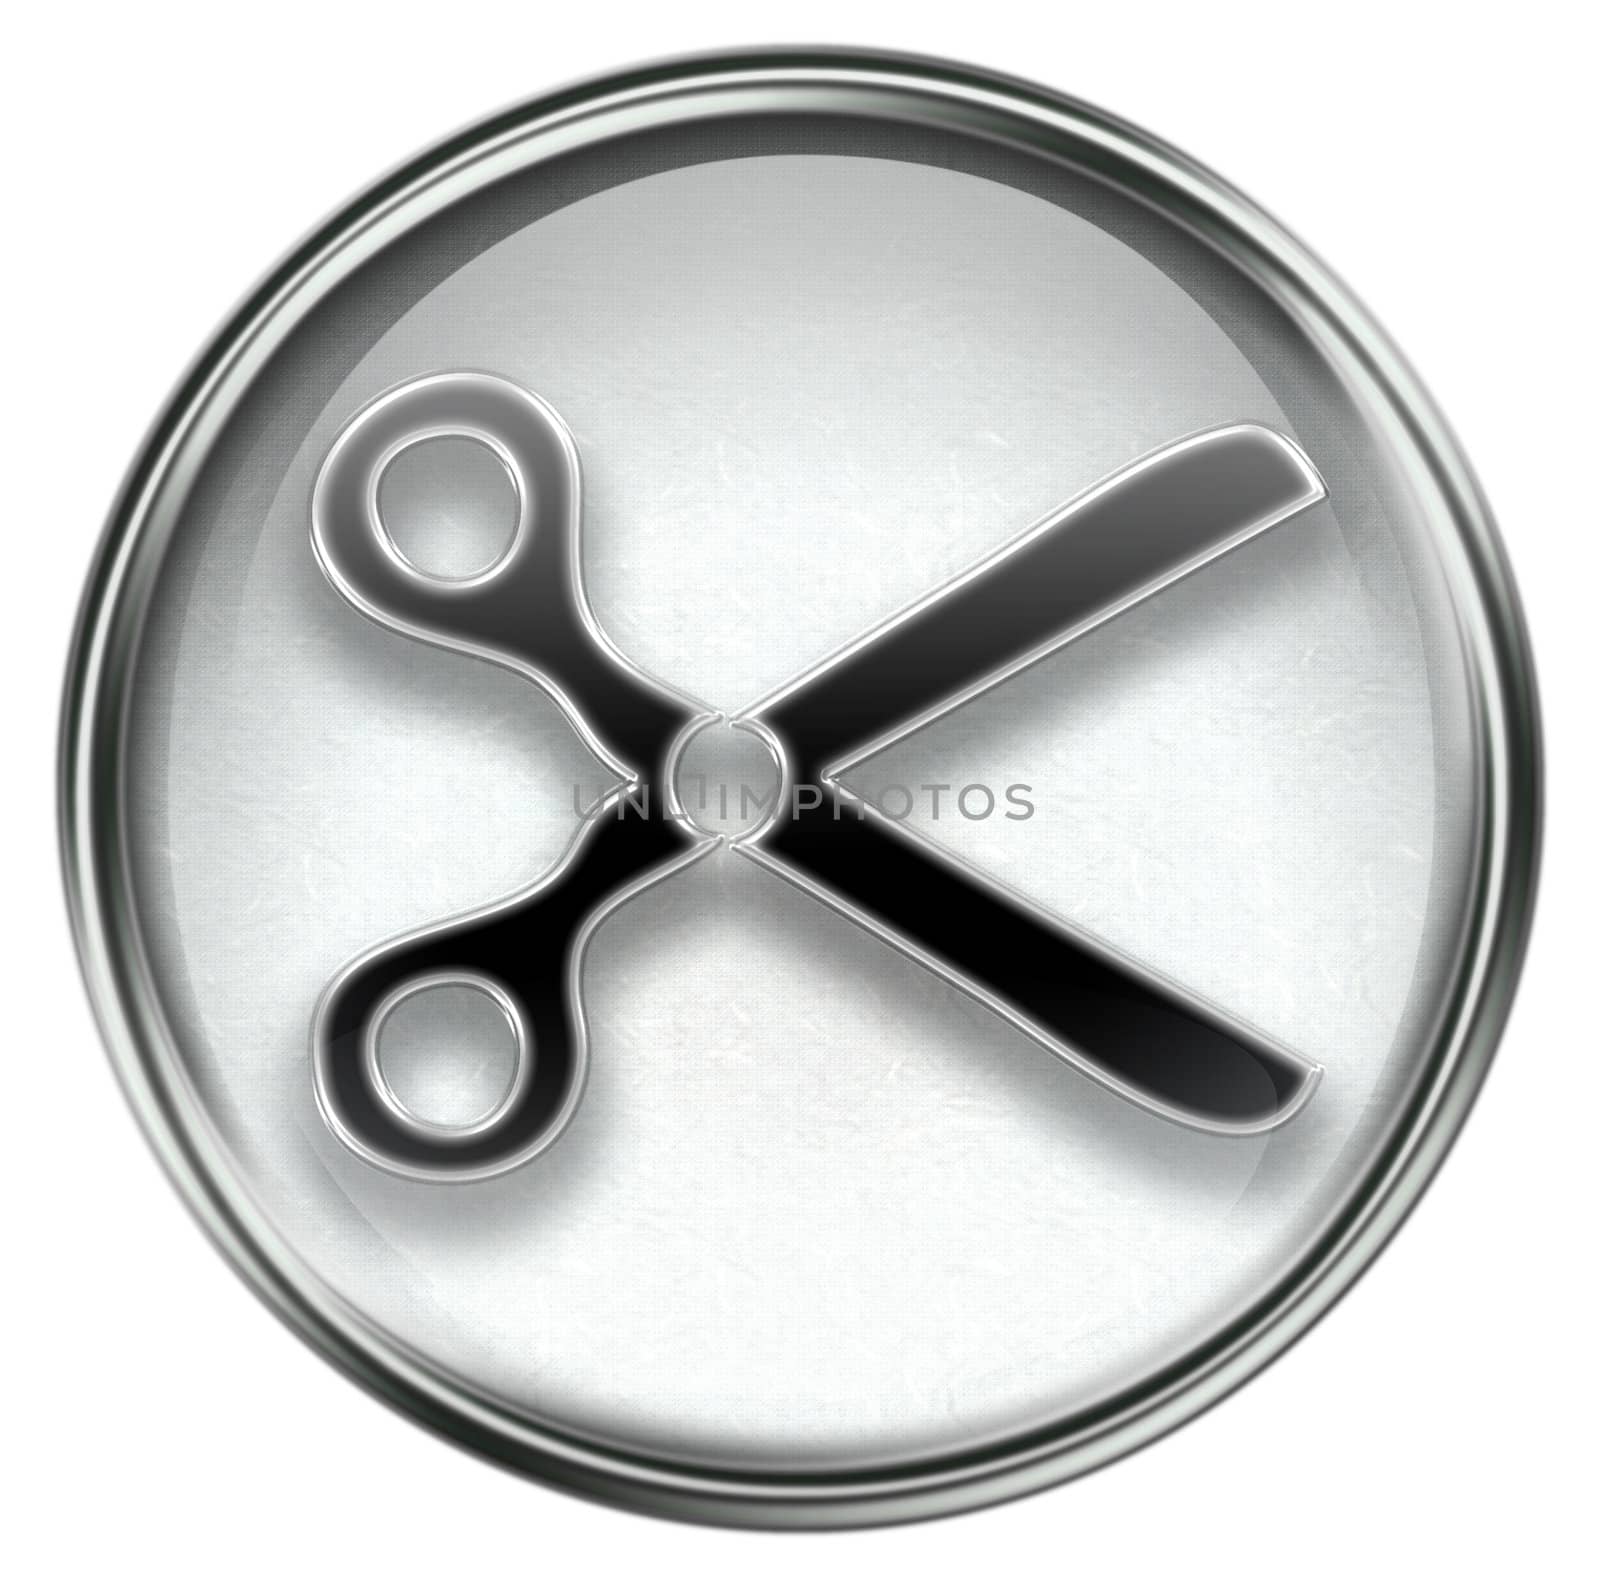 scissors icon grey, isolated on white background.